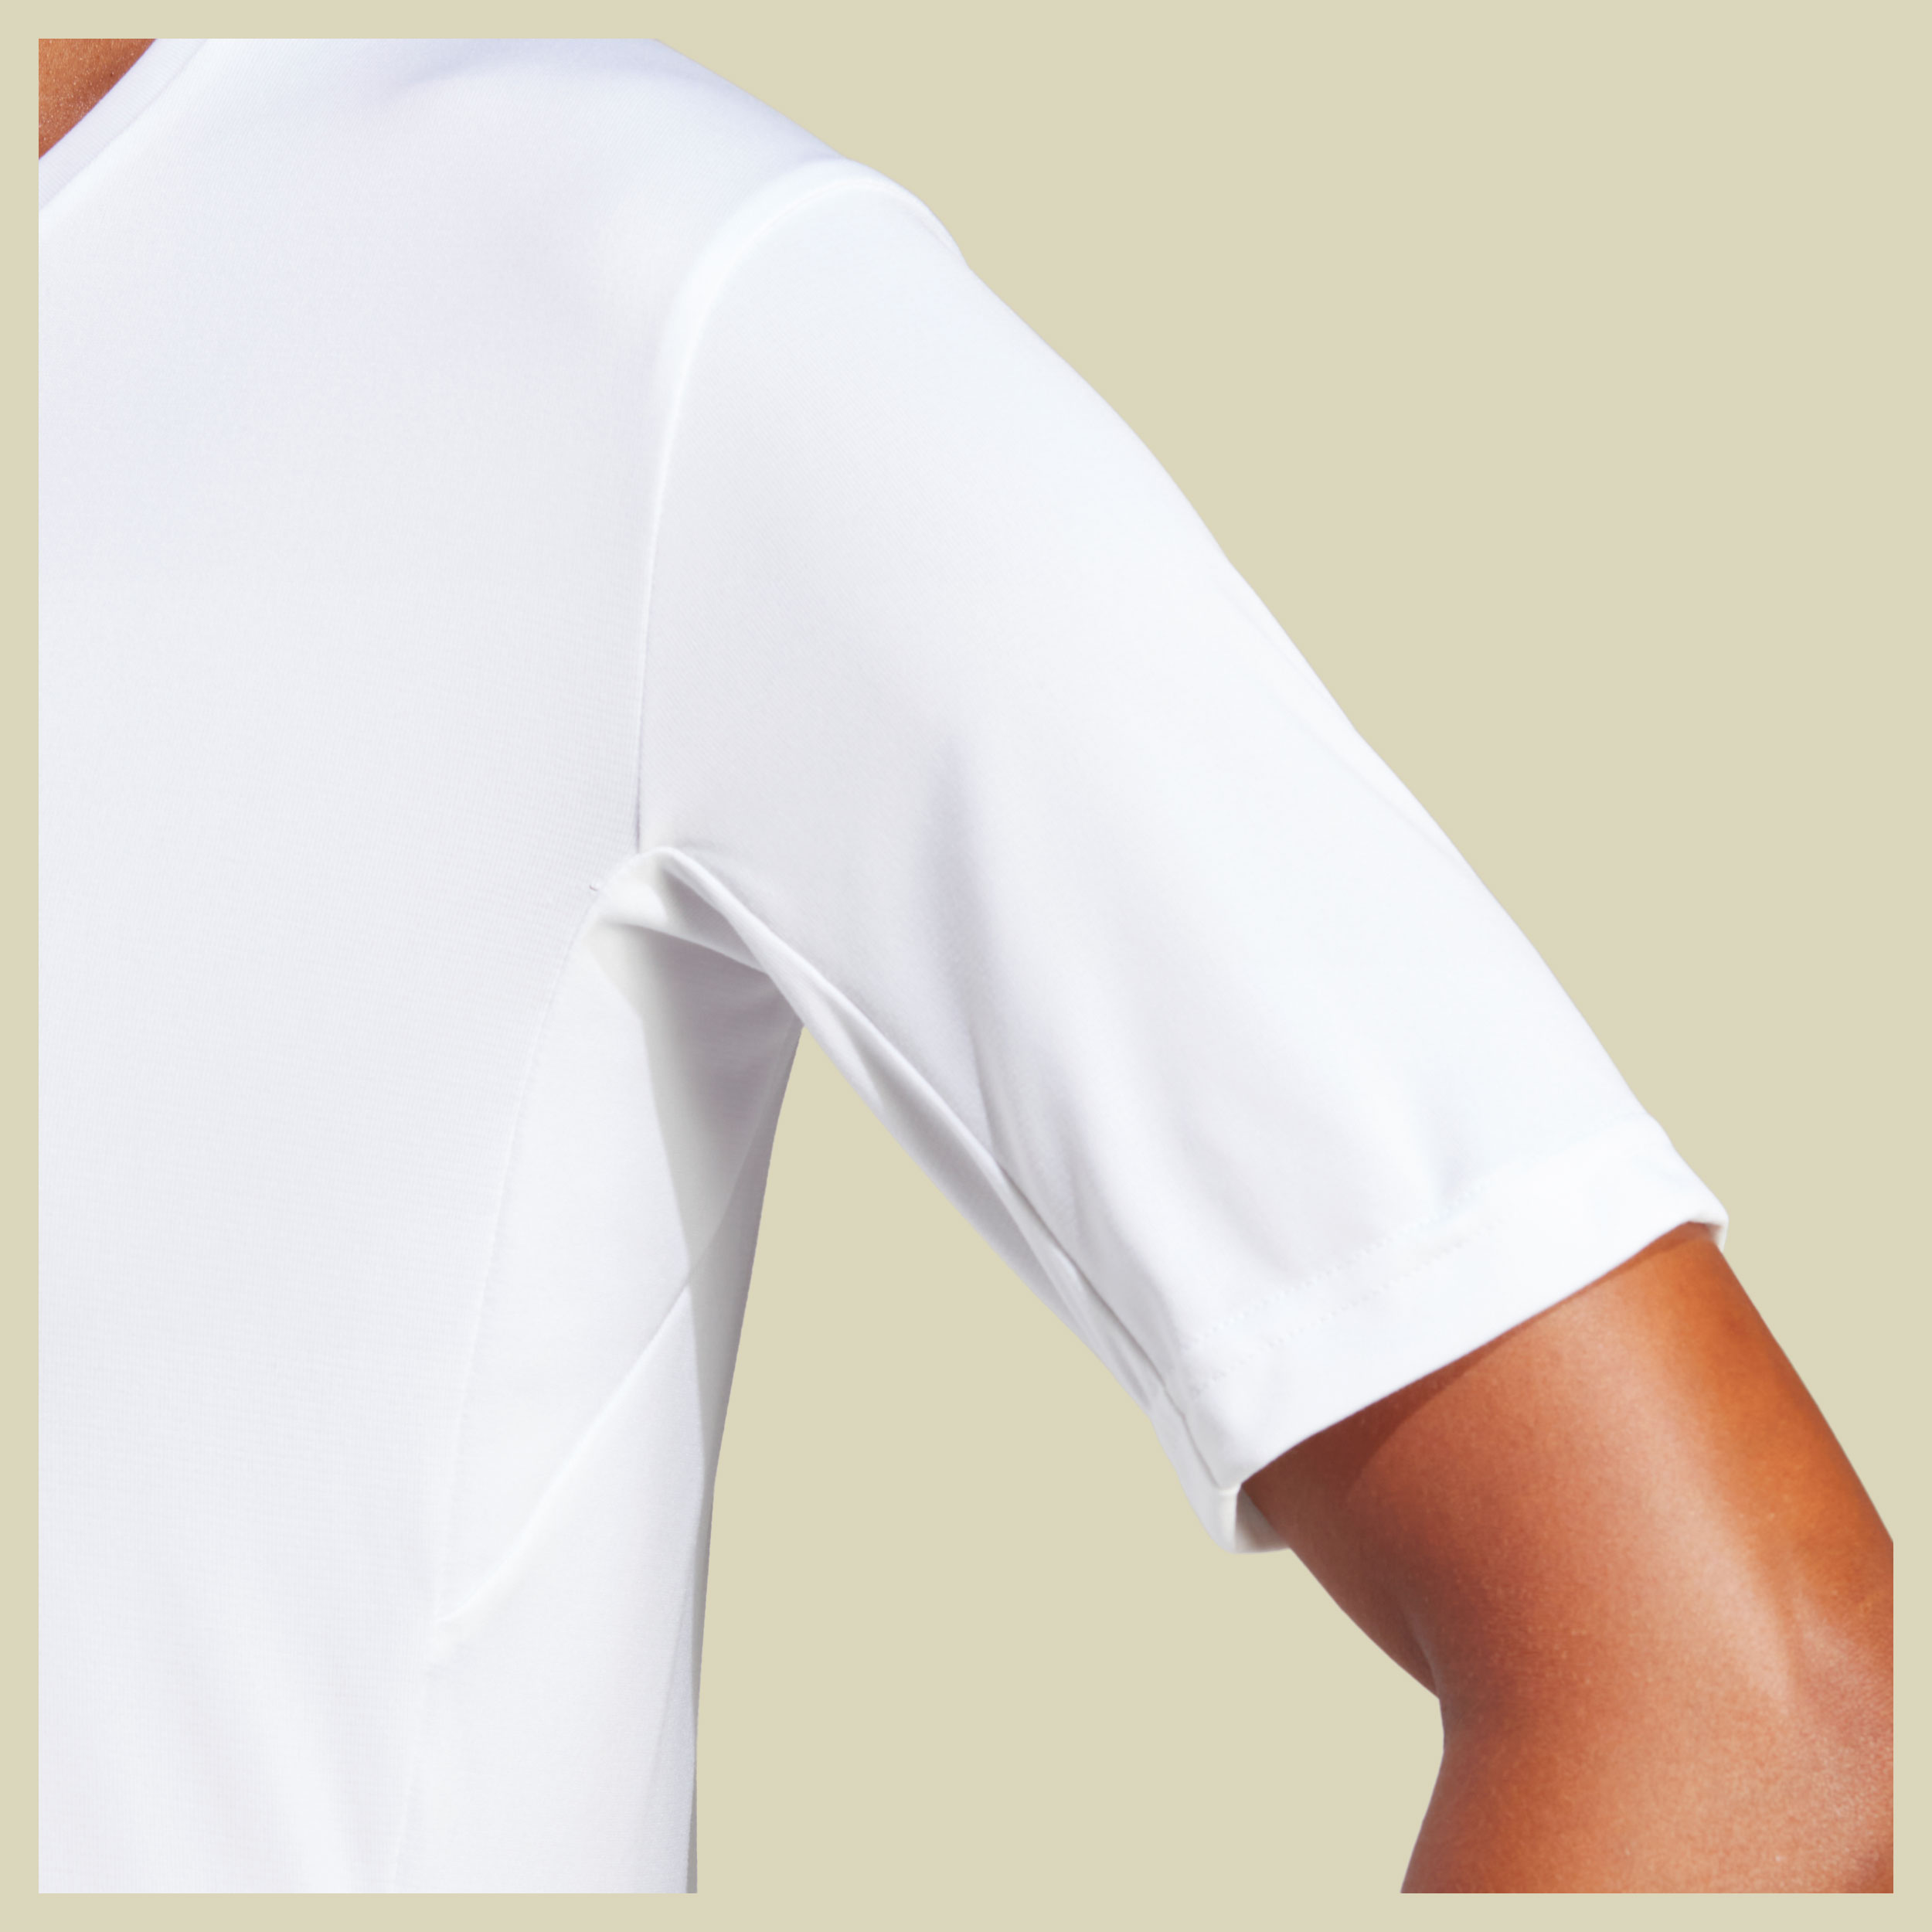 Terrex Multi T-Shirt Women Größe S Farbe white